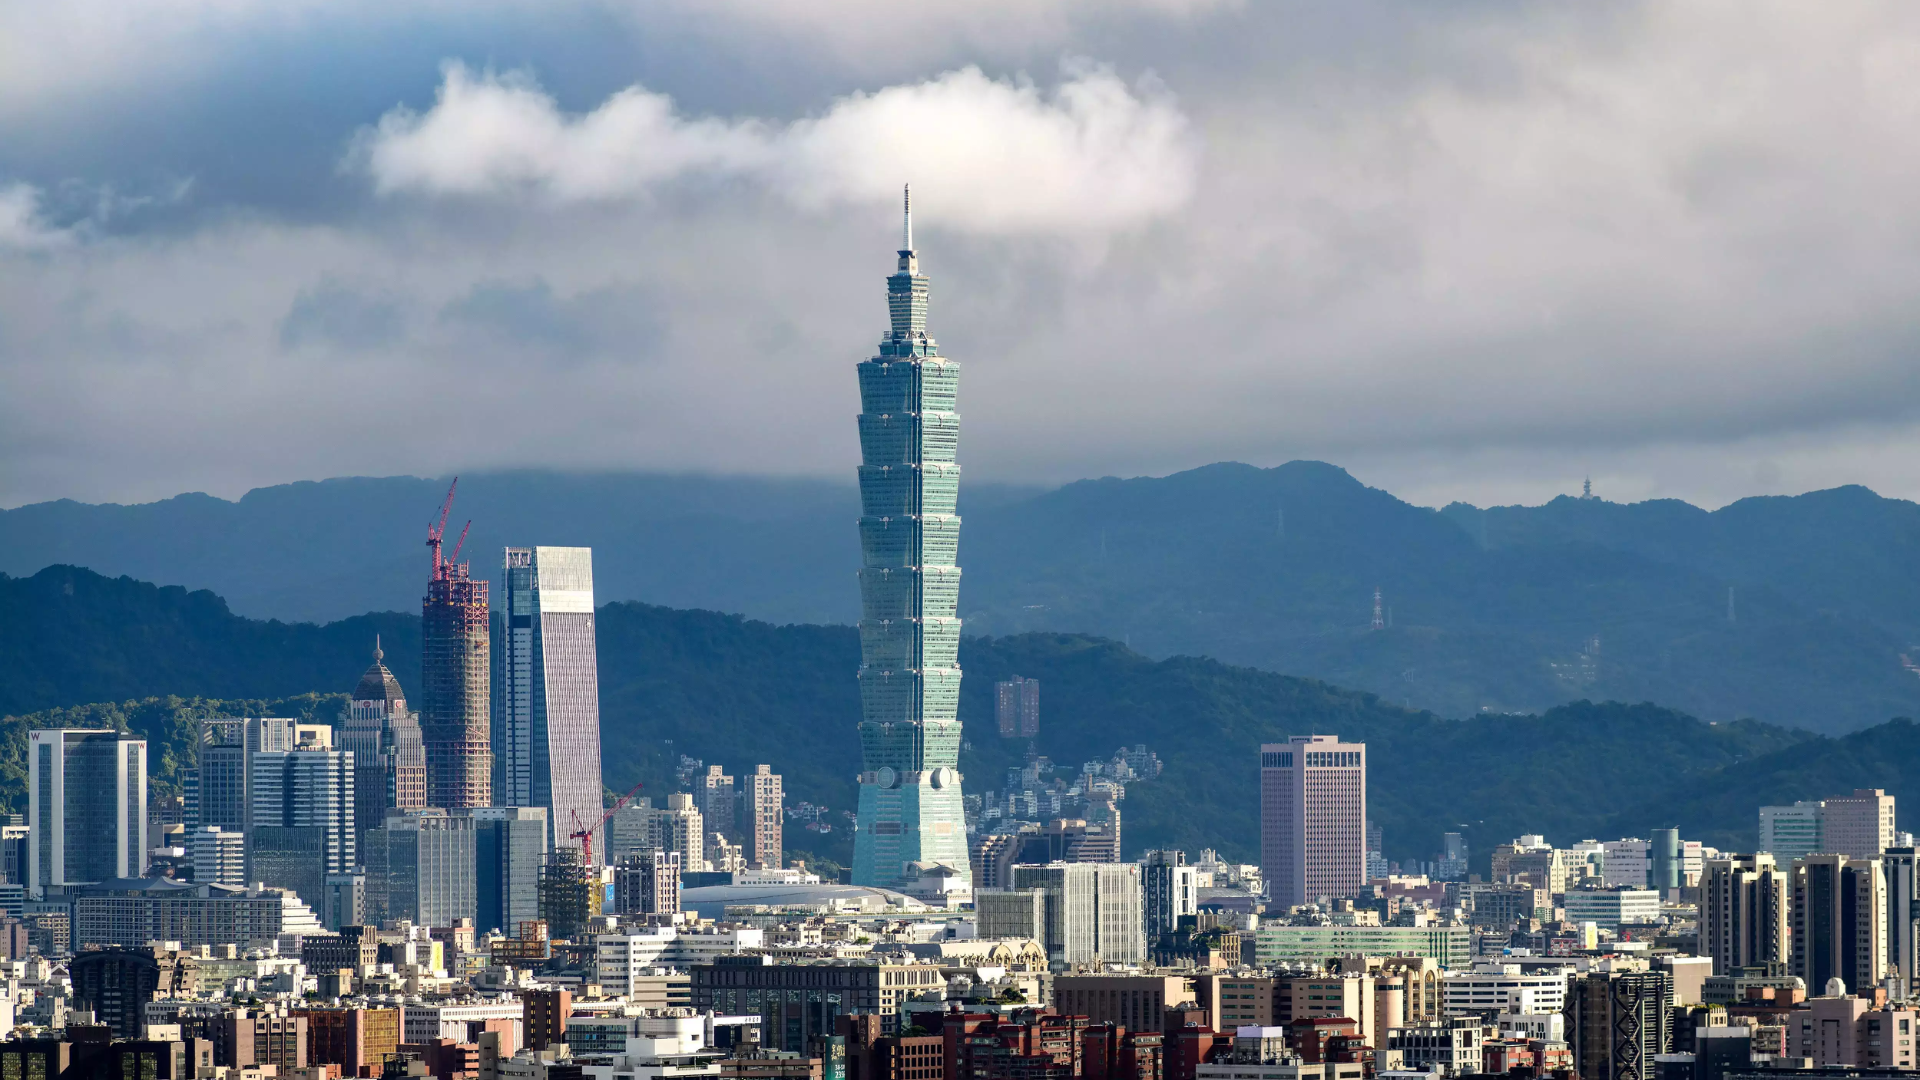 660-Tonne Pendulum Safeguards Taiwan’s Tallest Skyscraper During 7.4-Magnitude Earthquake